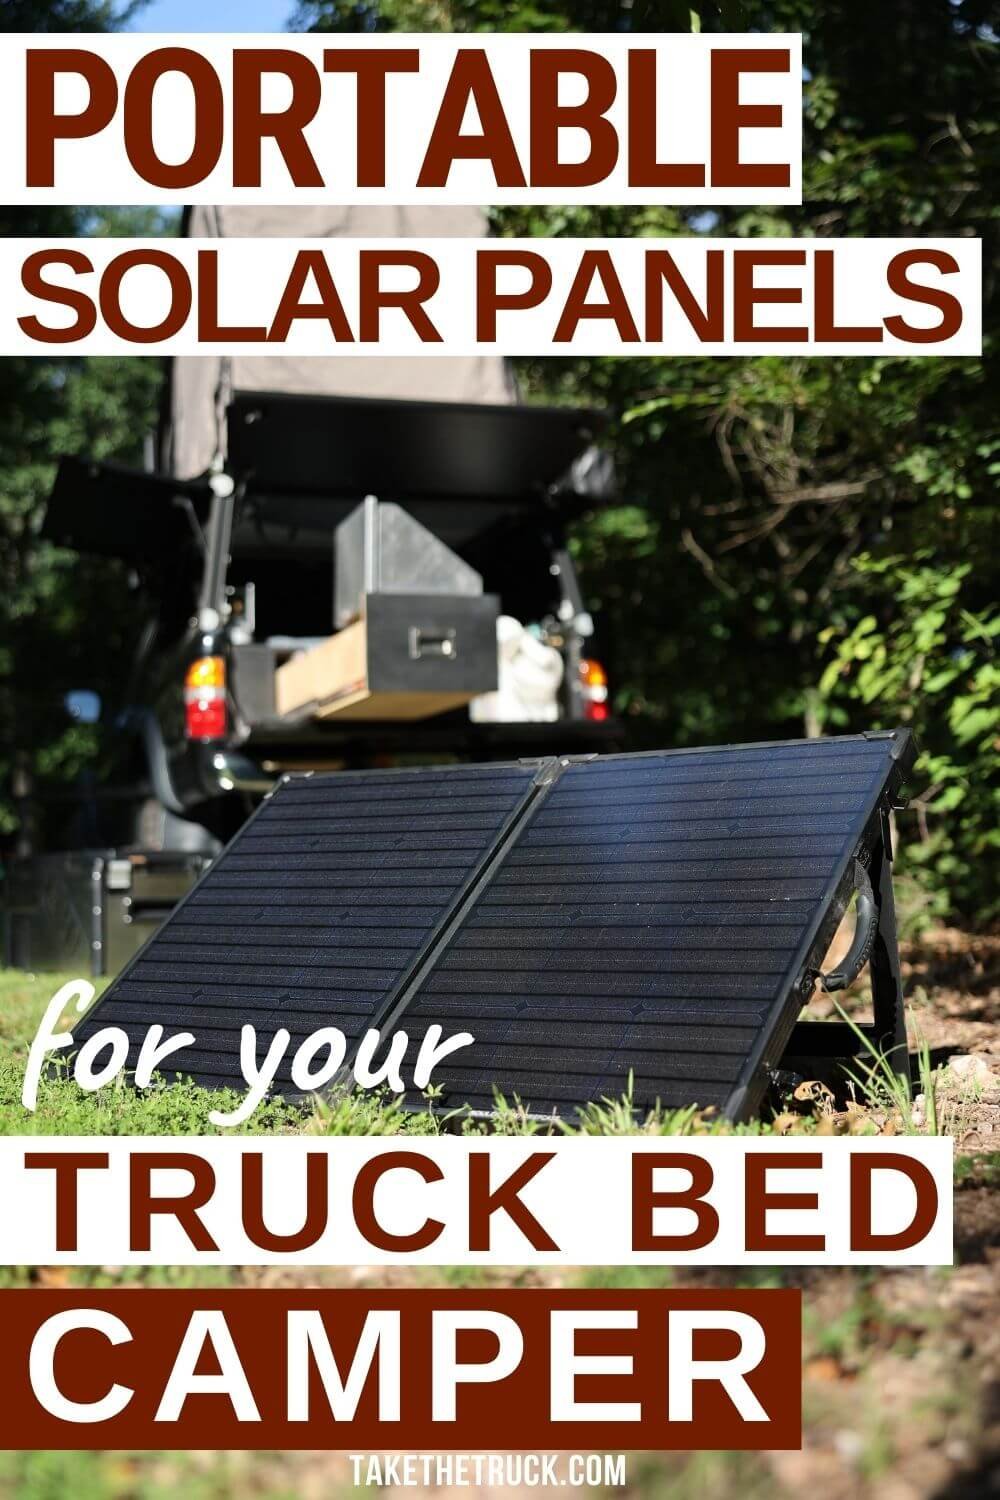 camping solar setup | camping solar panels | solar panels for camping | portable solar panels for camping